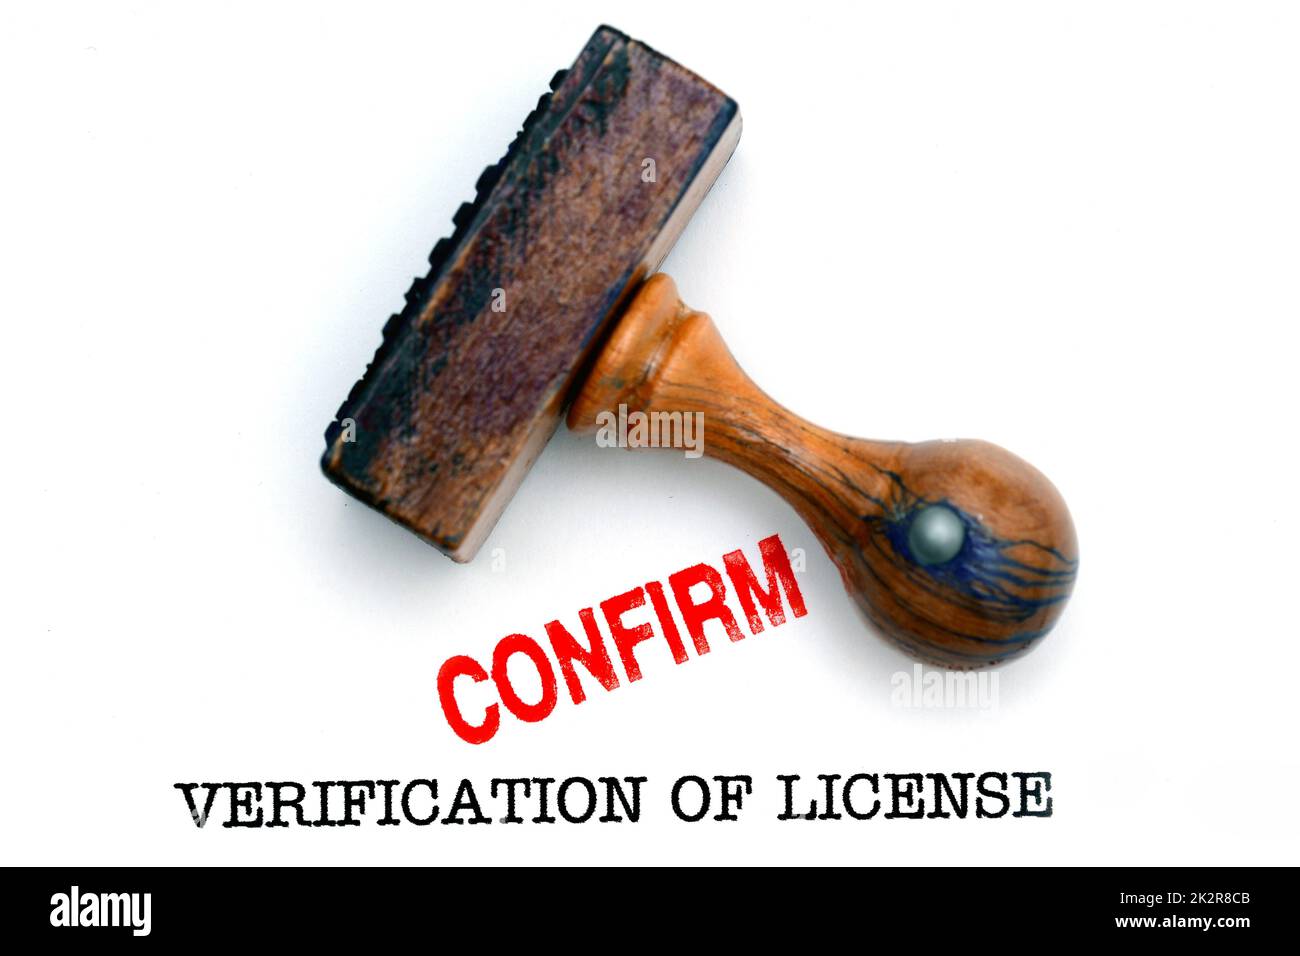 Verification of license Stock Photo